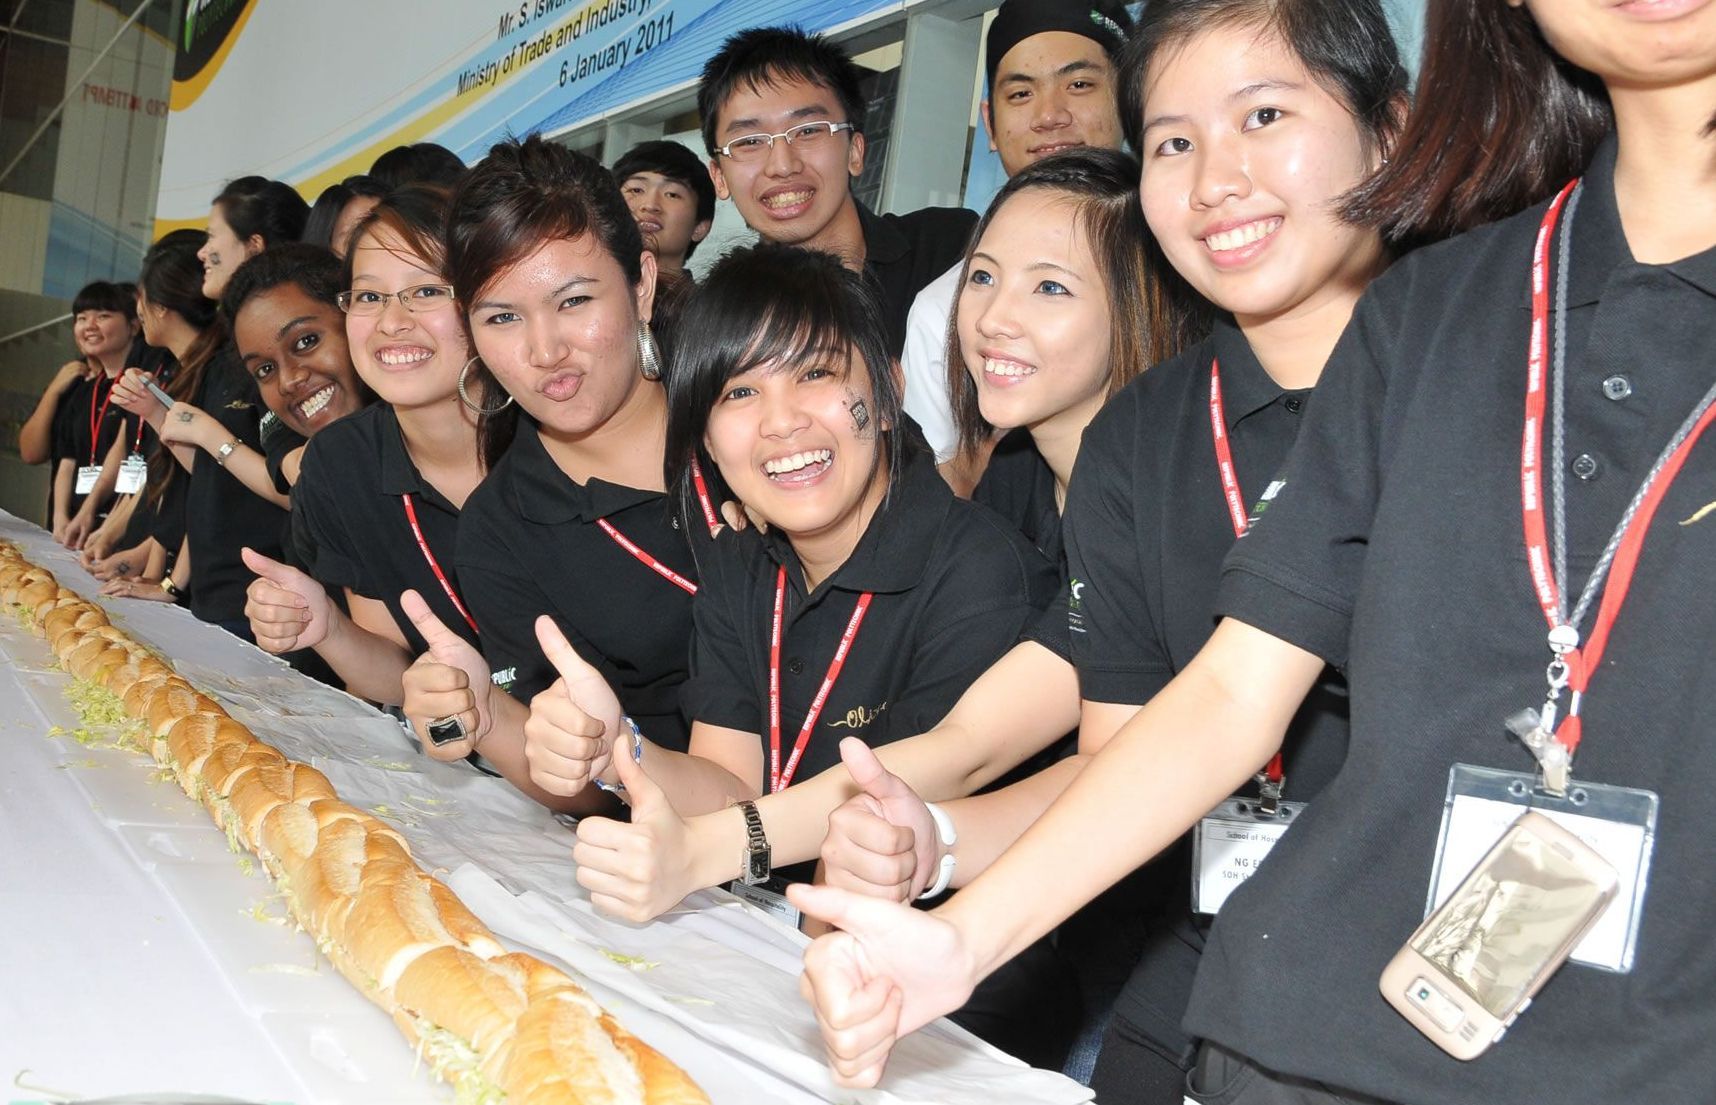 Longest Ham and Cheese Sandwich: Singapore students set world record